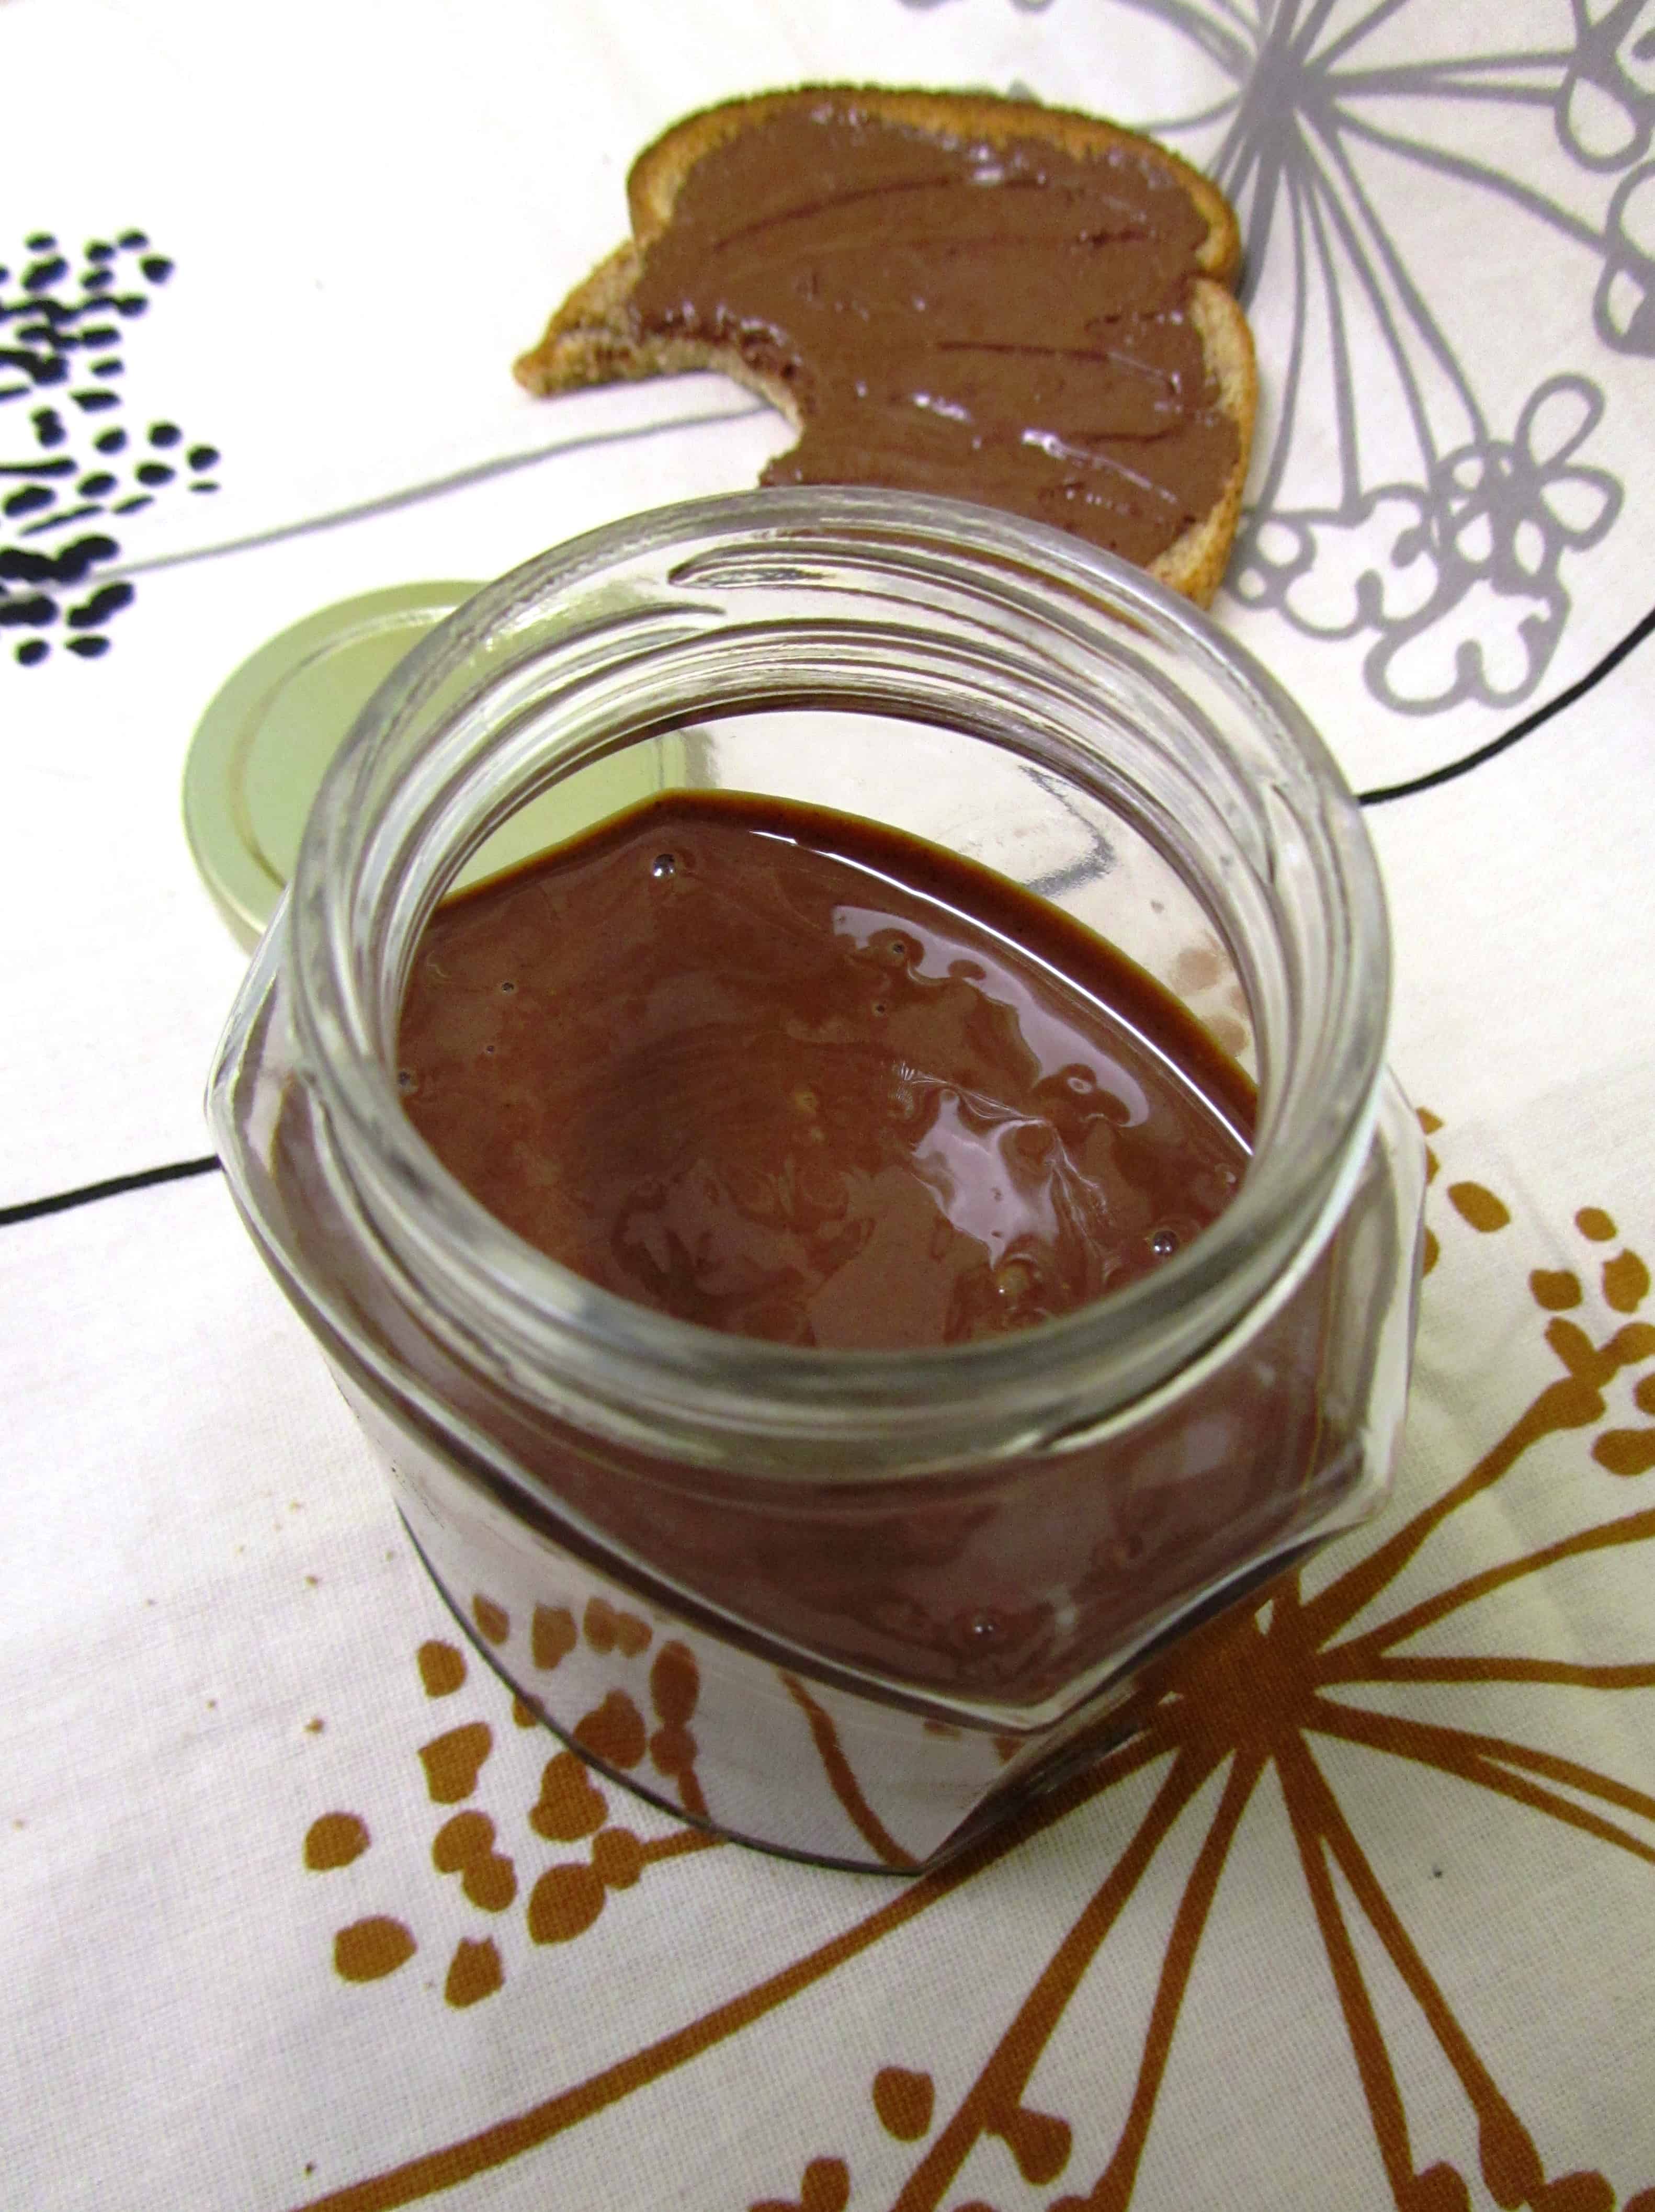 Homemade Hazelnut Chocolate Spread (Nutella) | The Spiffy Cookie